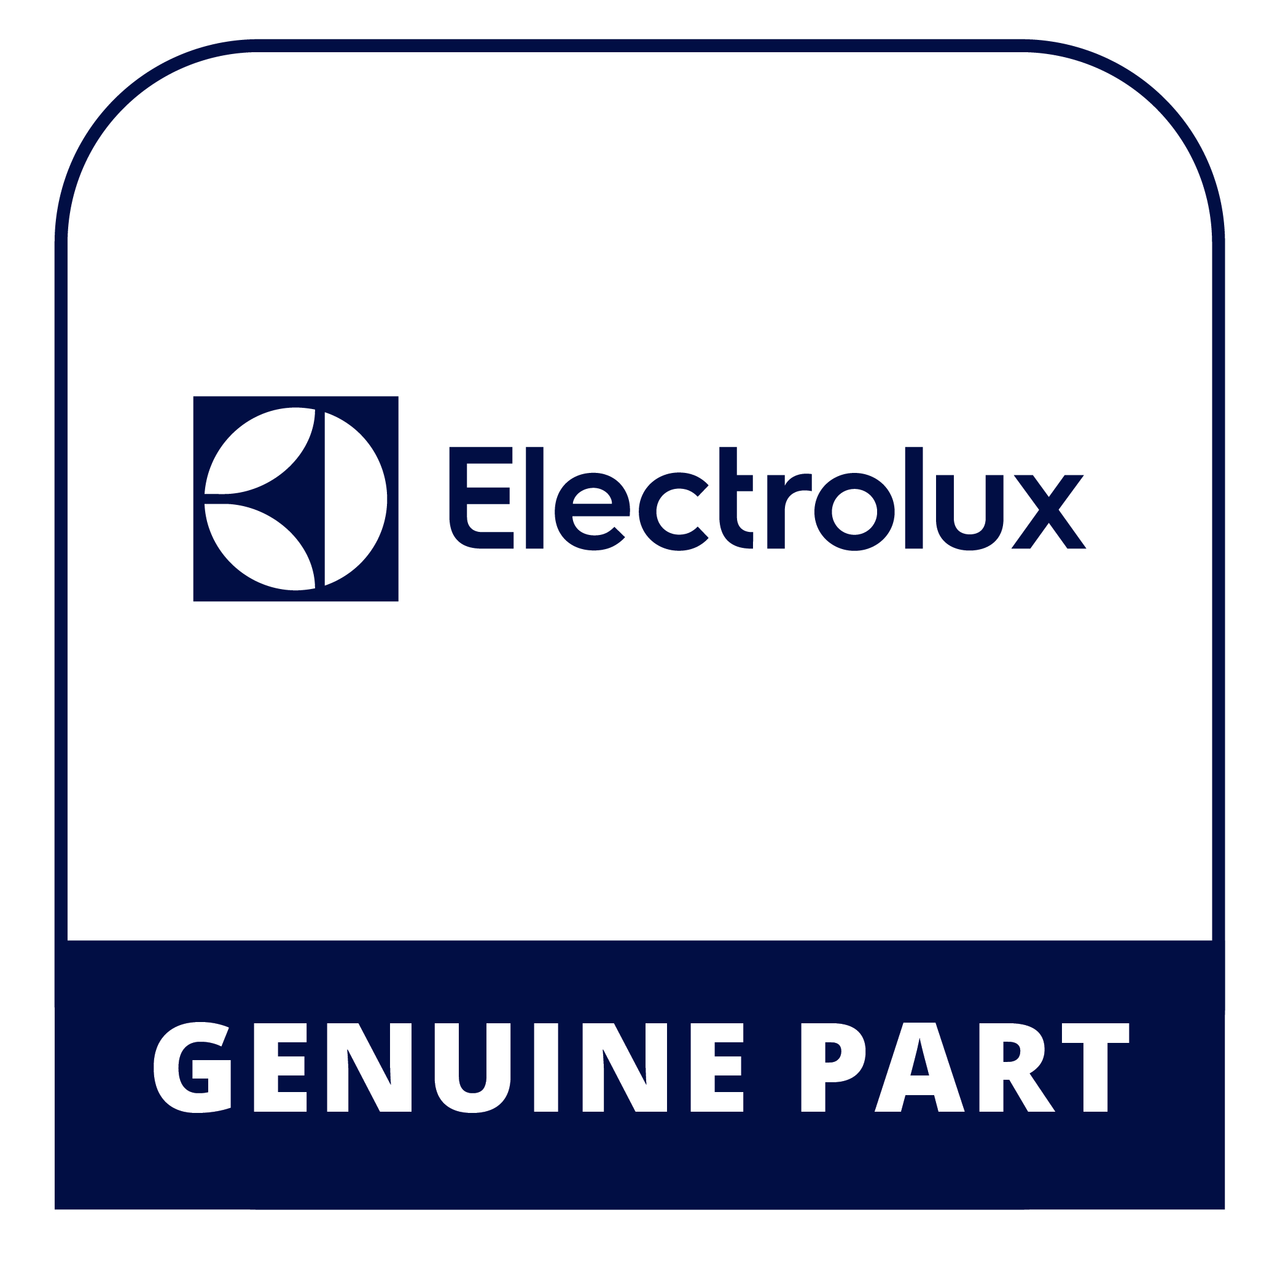 Frigidaire - Electrolux 97391453500200 Control - Genuine Electrolux Part